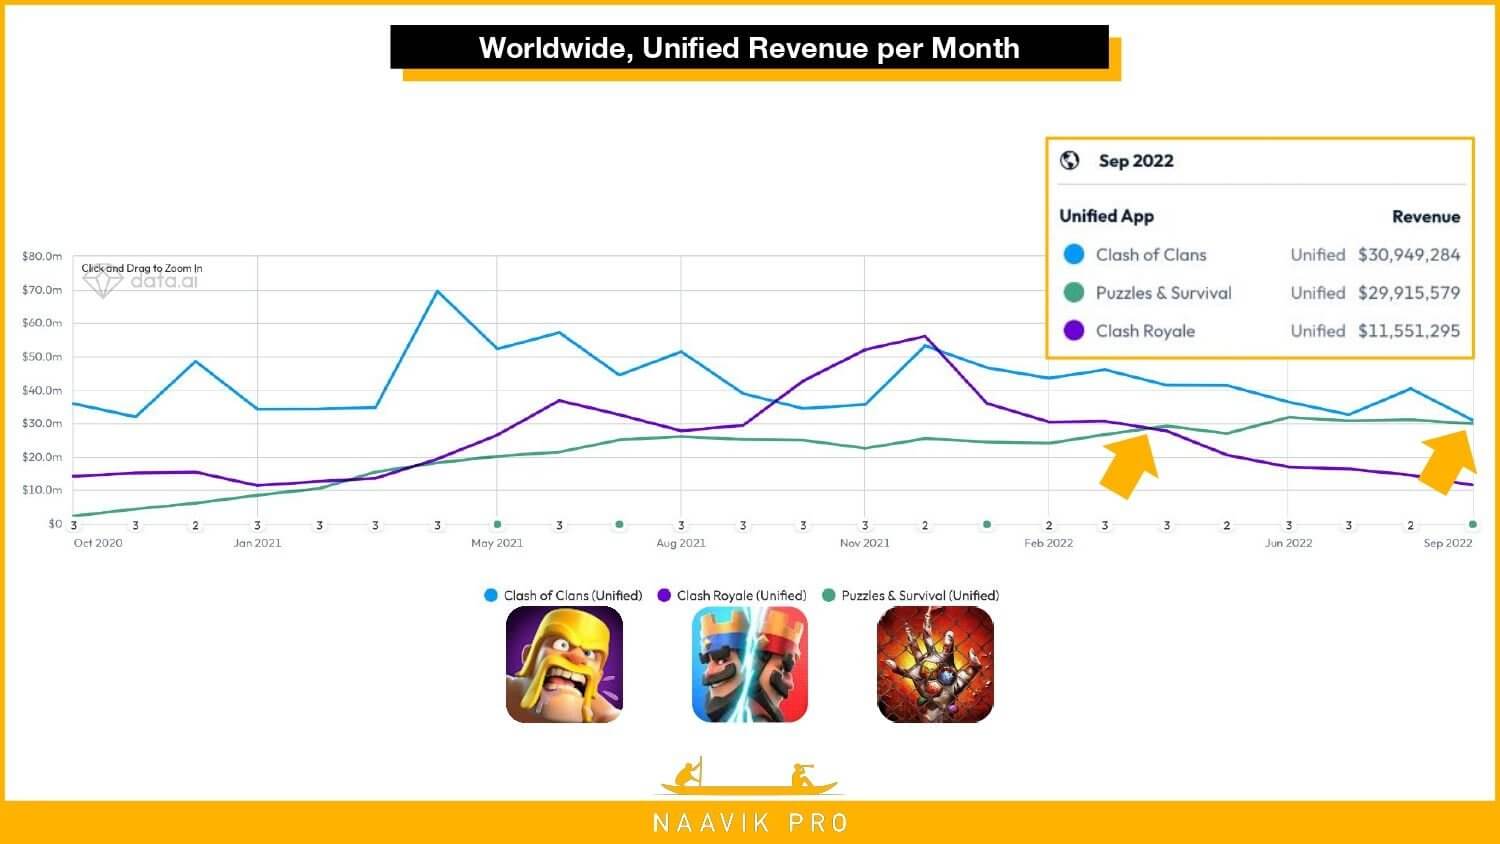 Worldwide, Unified Revenue per month